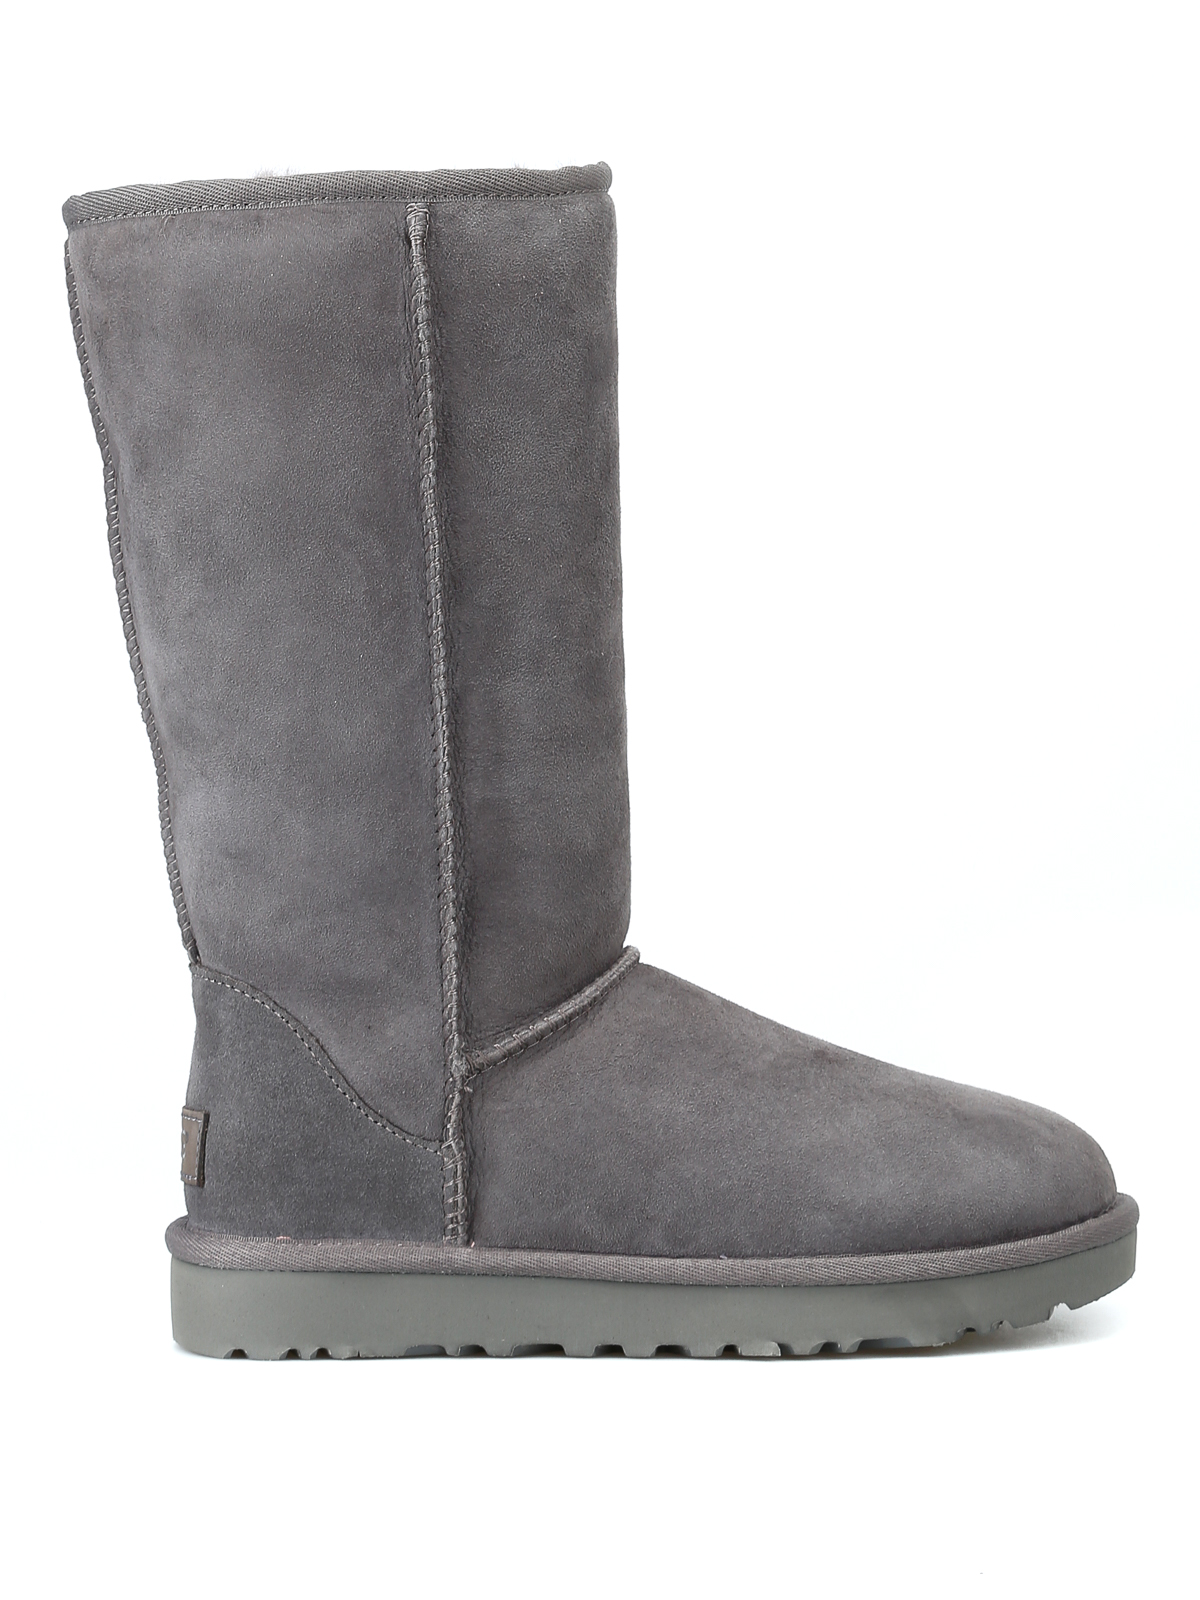 Boots Ugg - Classic Tall II grey boots - 1016224WGREY | iKRIX.com